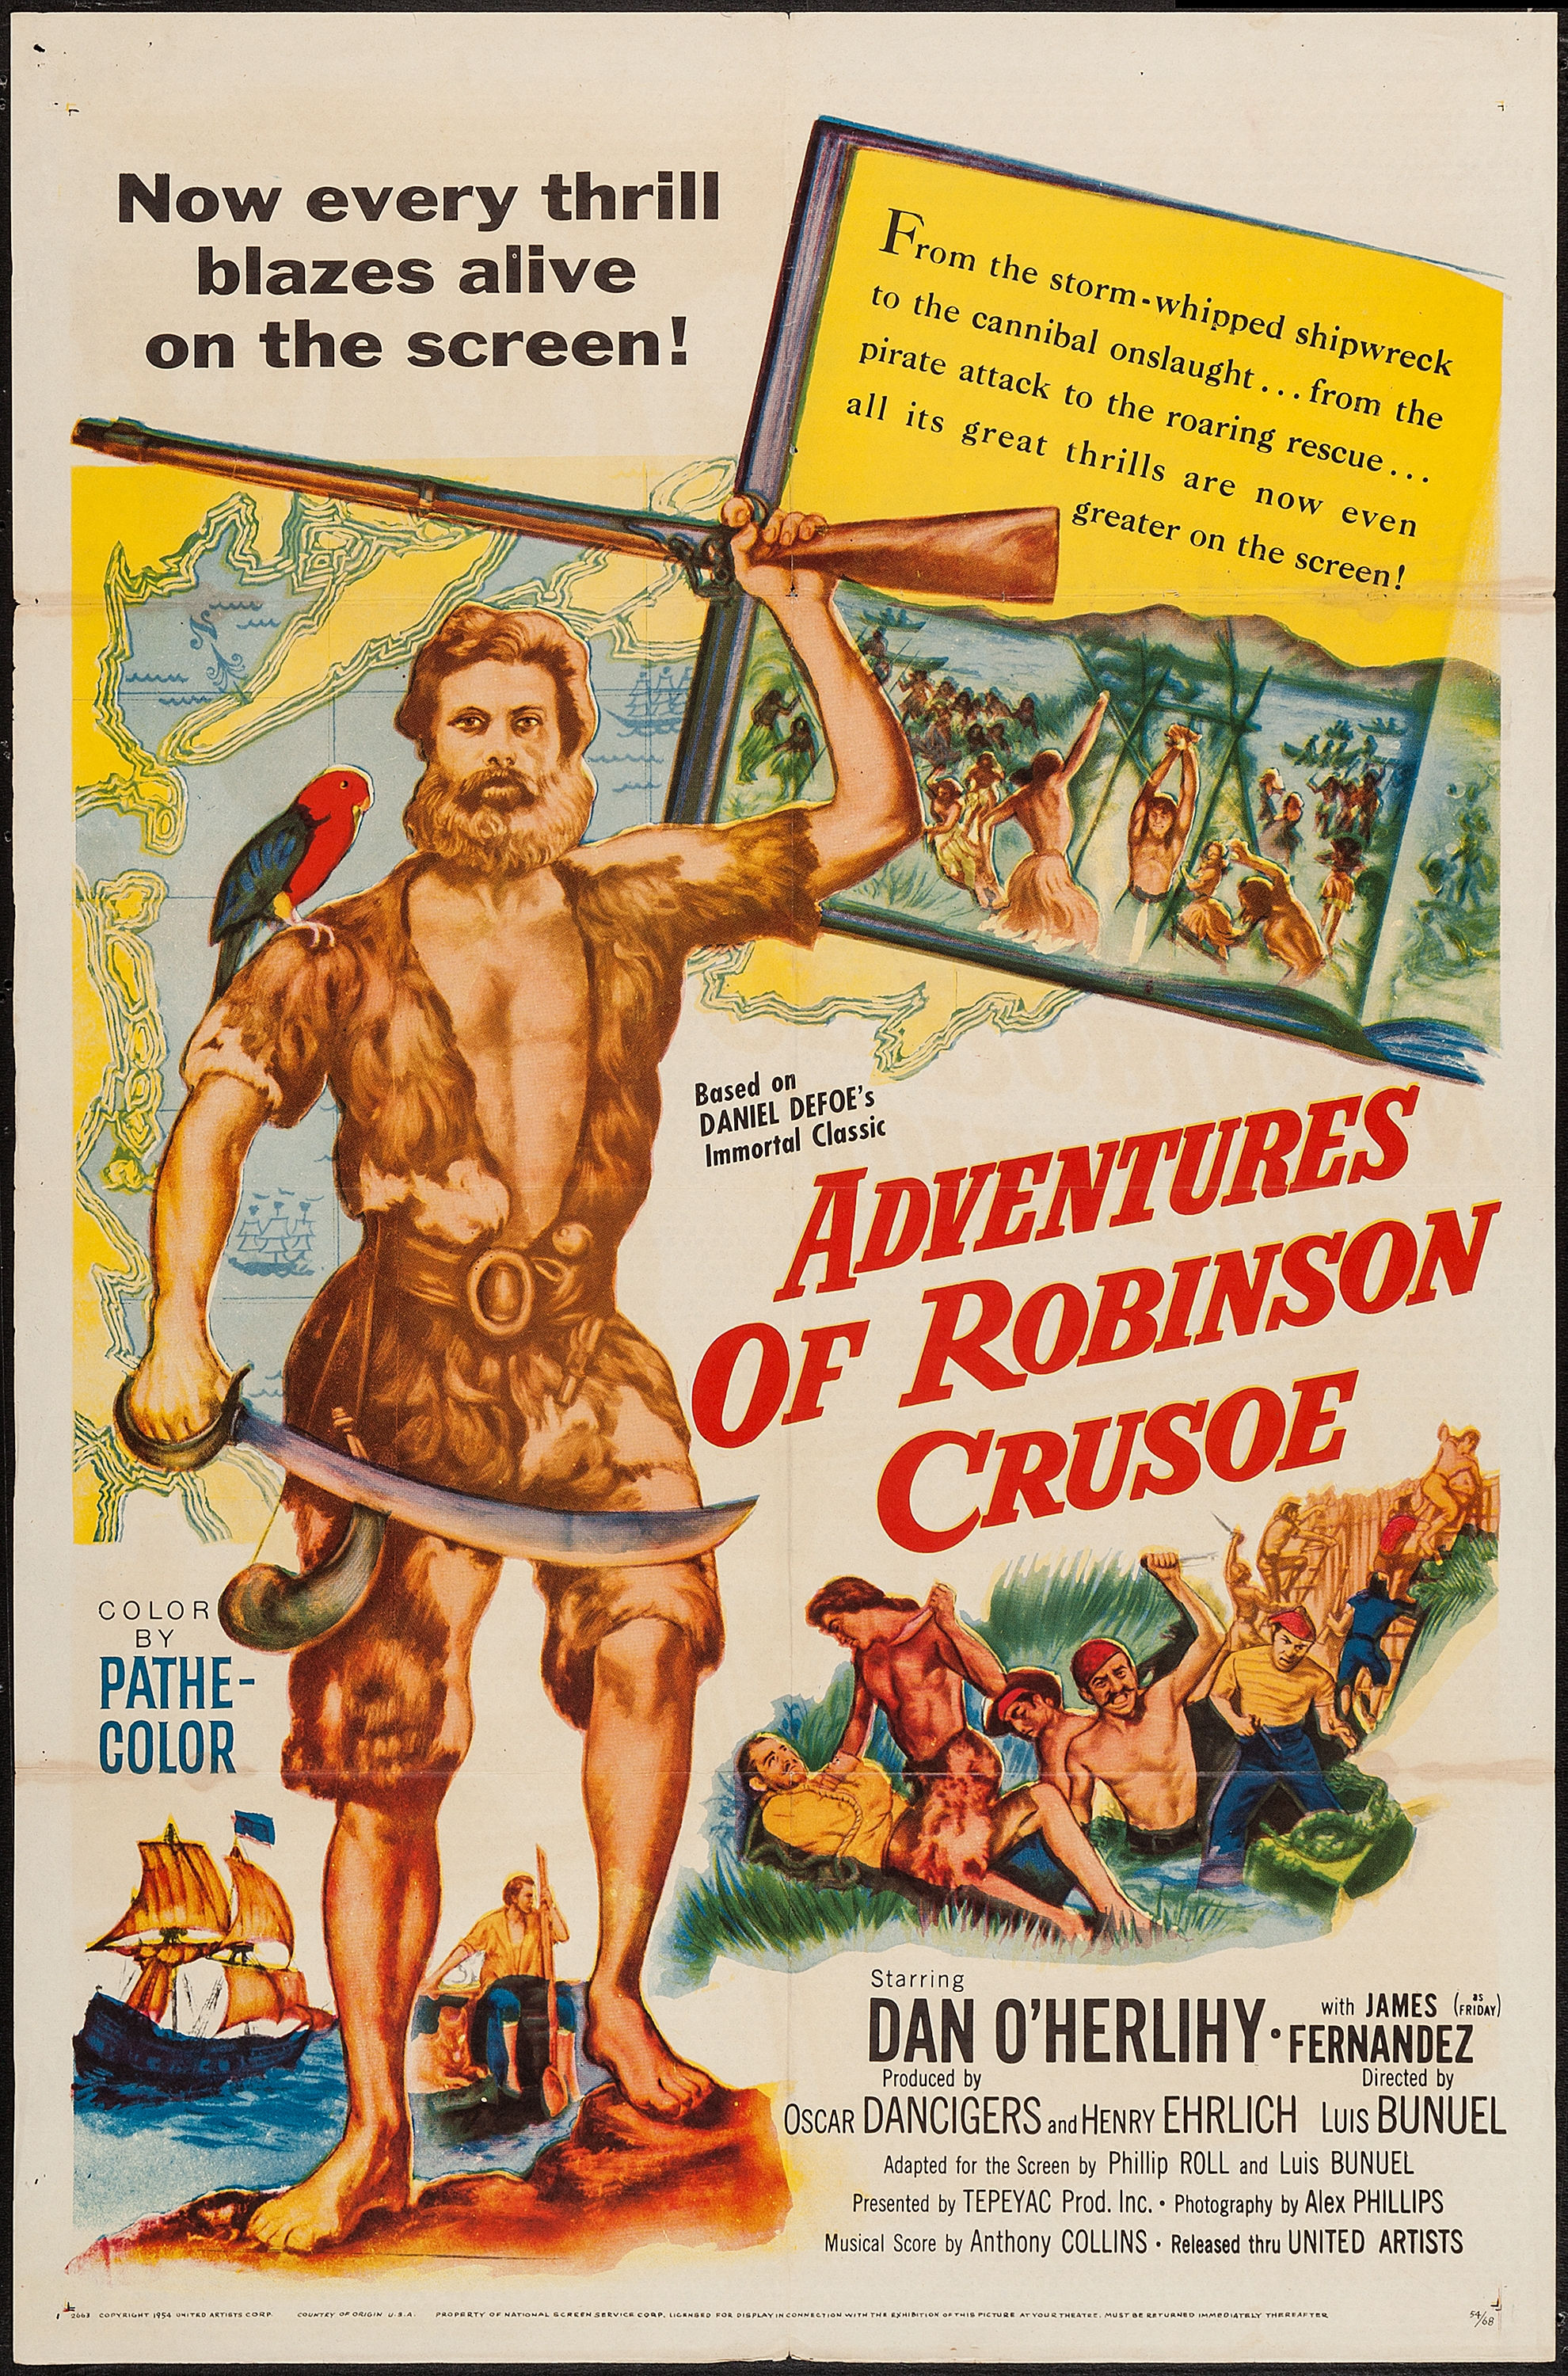 christine landsborough add photo robinson crusoe full movie